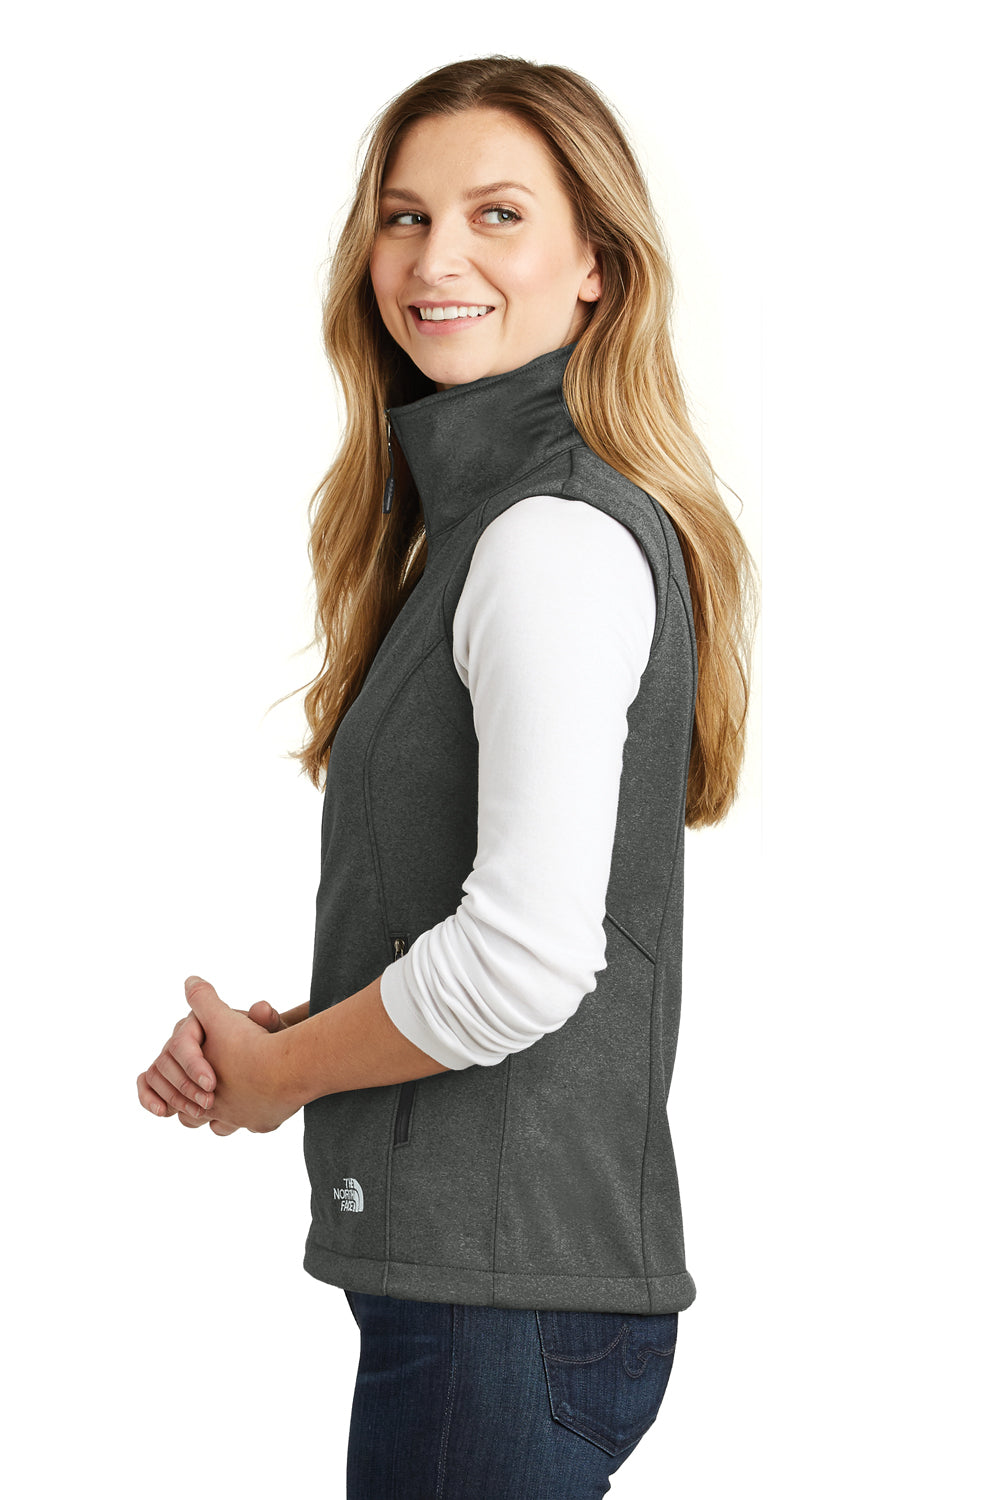 The North Face NF0A3LH1 Womens Ridgeline Wind & Water Resistant Full Zip Vest Heather Dark Grey Side